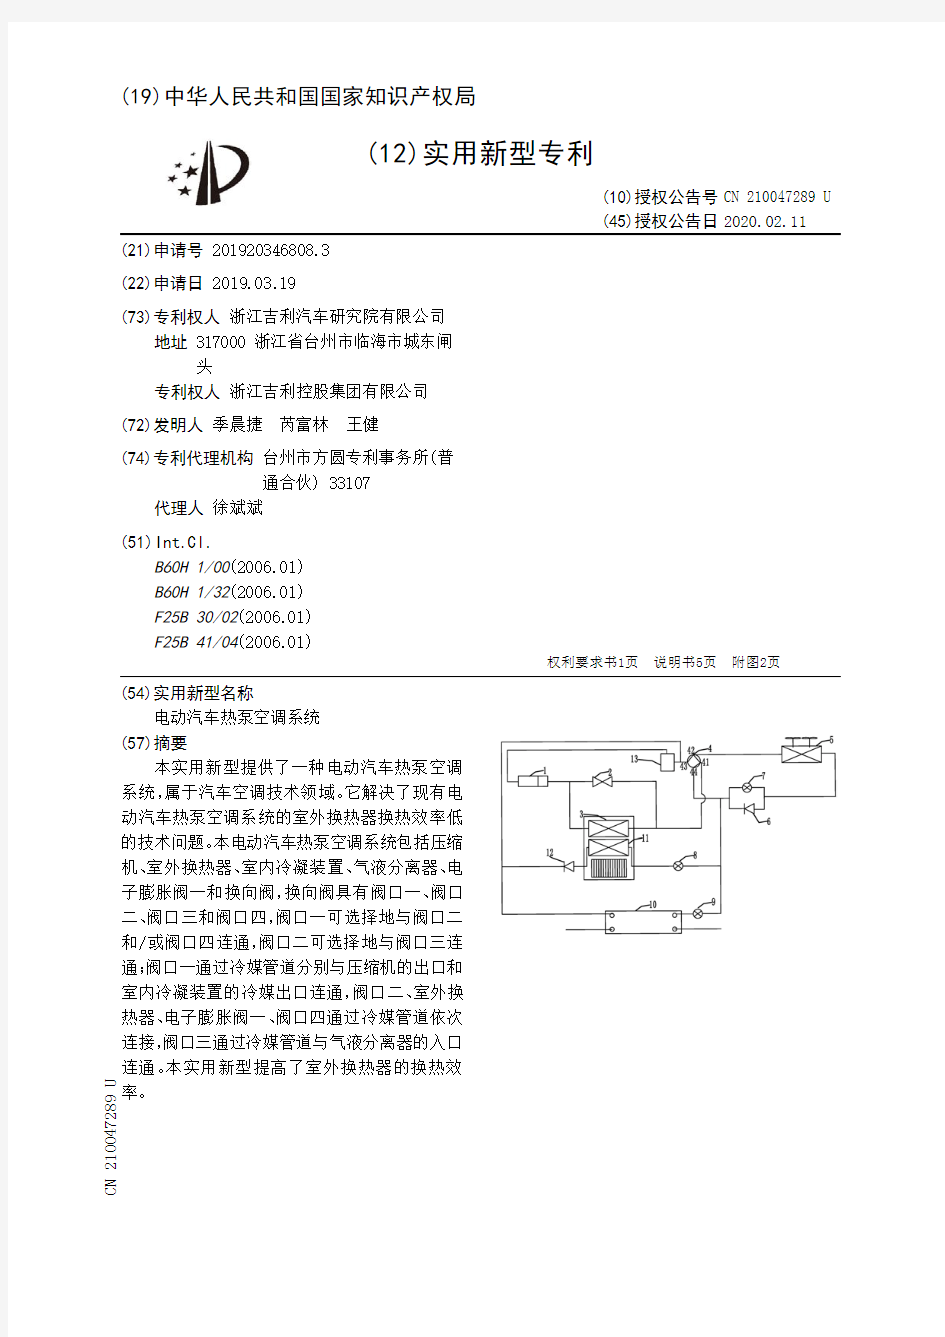 【CN210047289U】电动汽车热泵空调系统【专利】